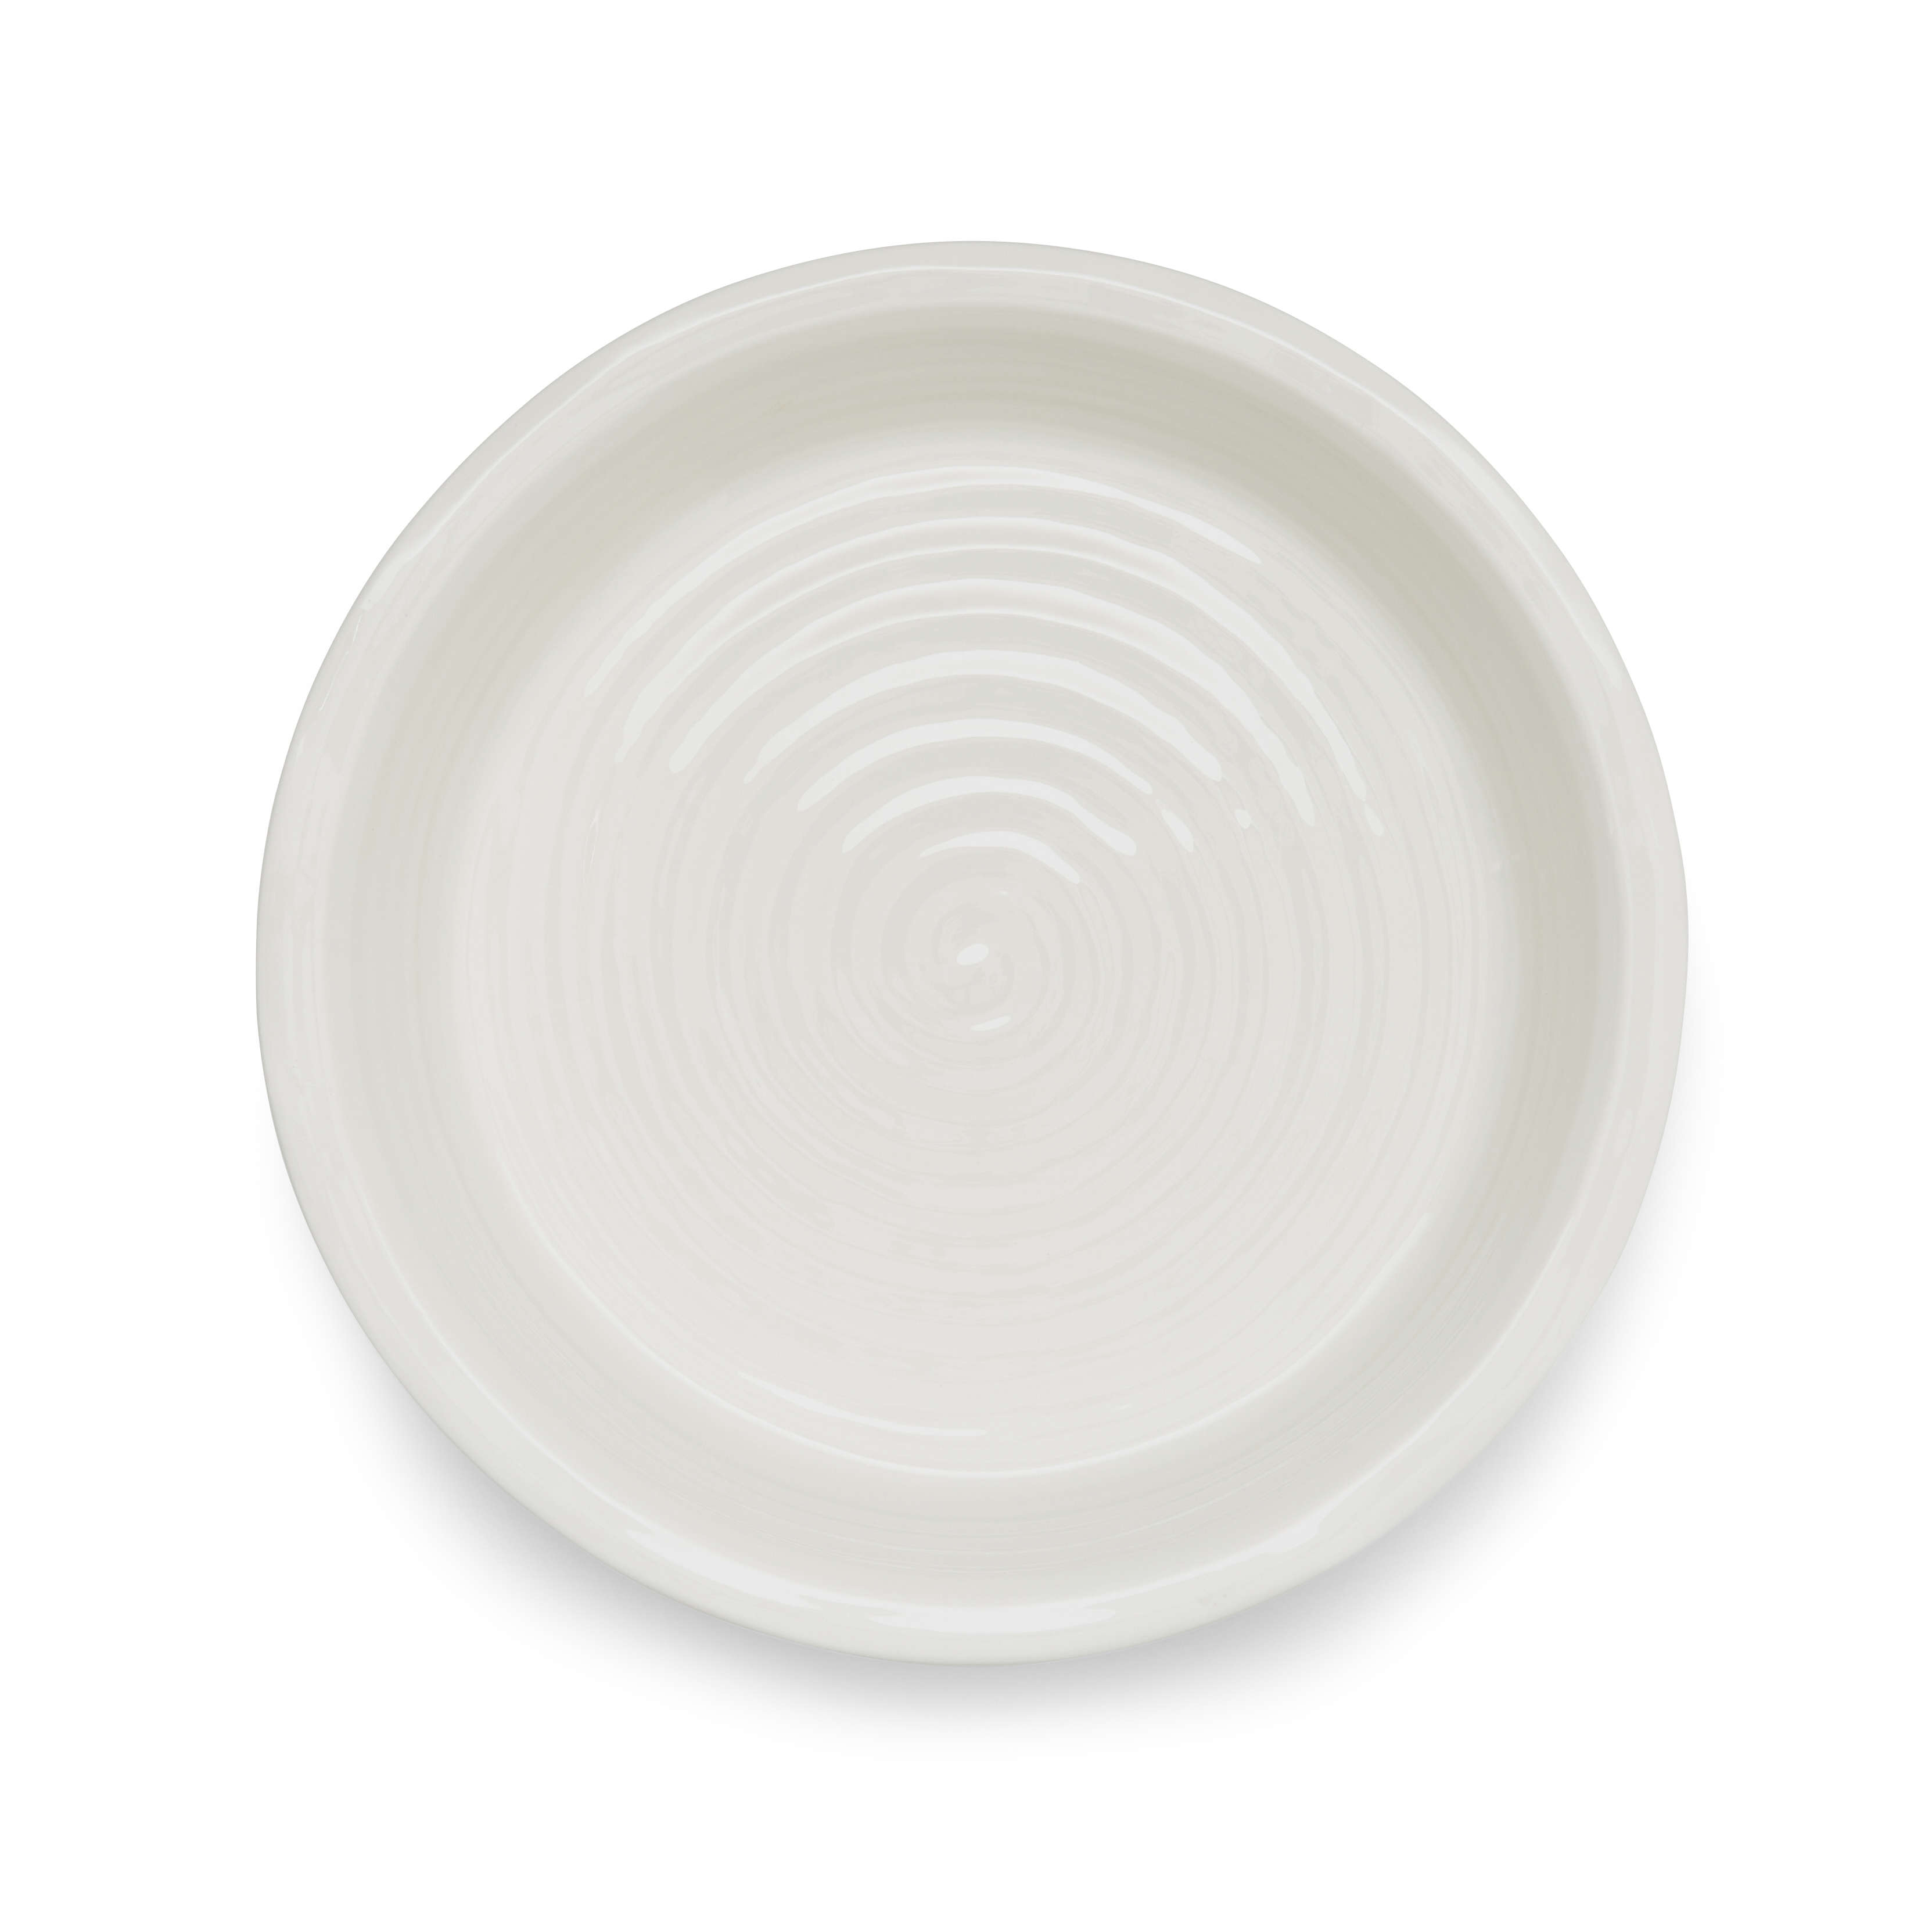 Foraineam 12 Pcs Dinner Plates Round Porcelain Tableware Service Plate Dish Serving Plates for Salad Dessert Bread White 8 Inch// 20 cm